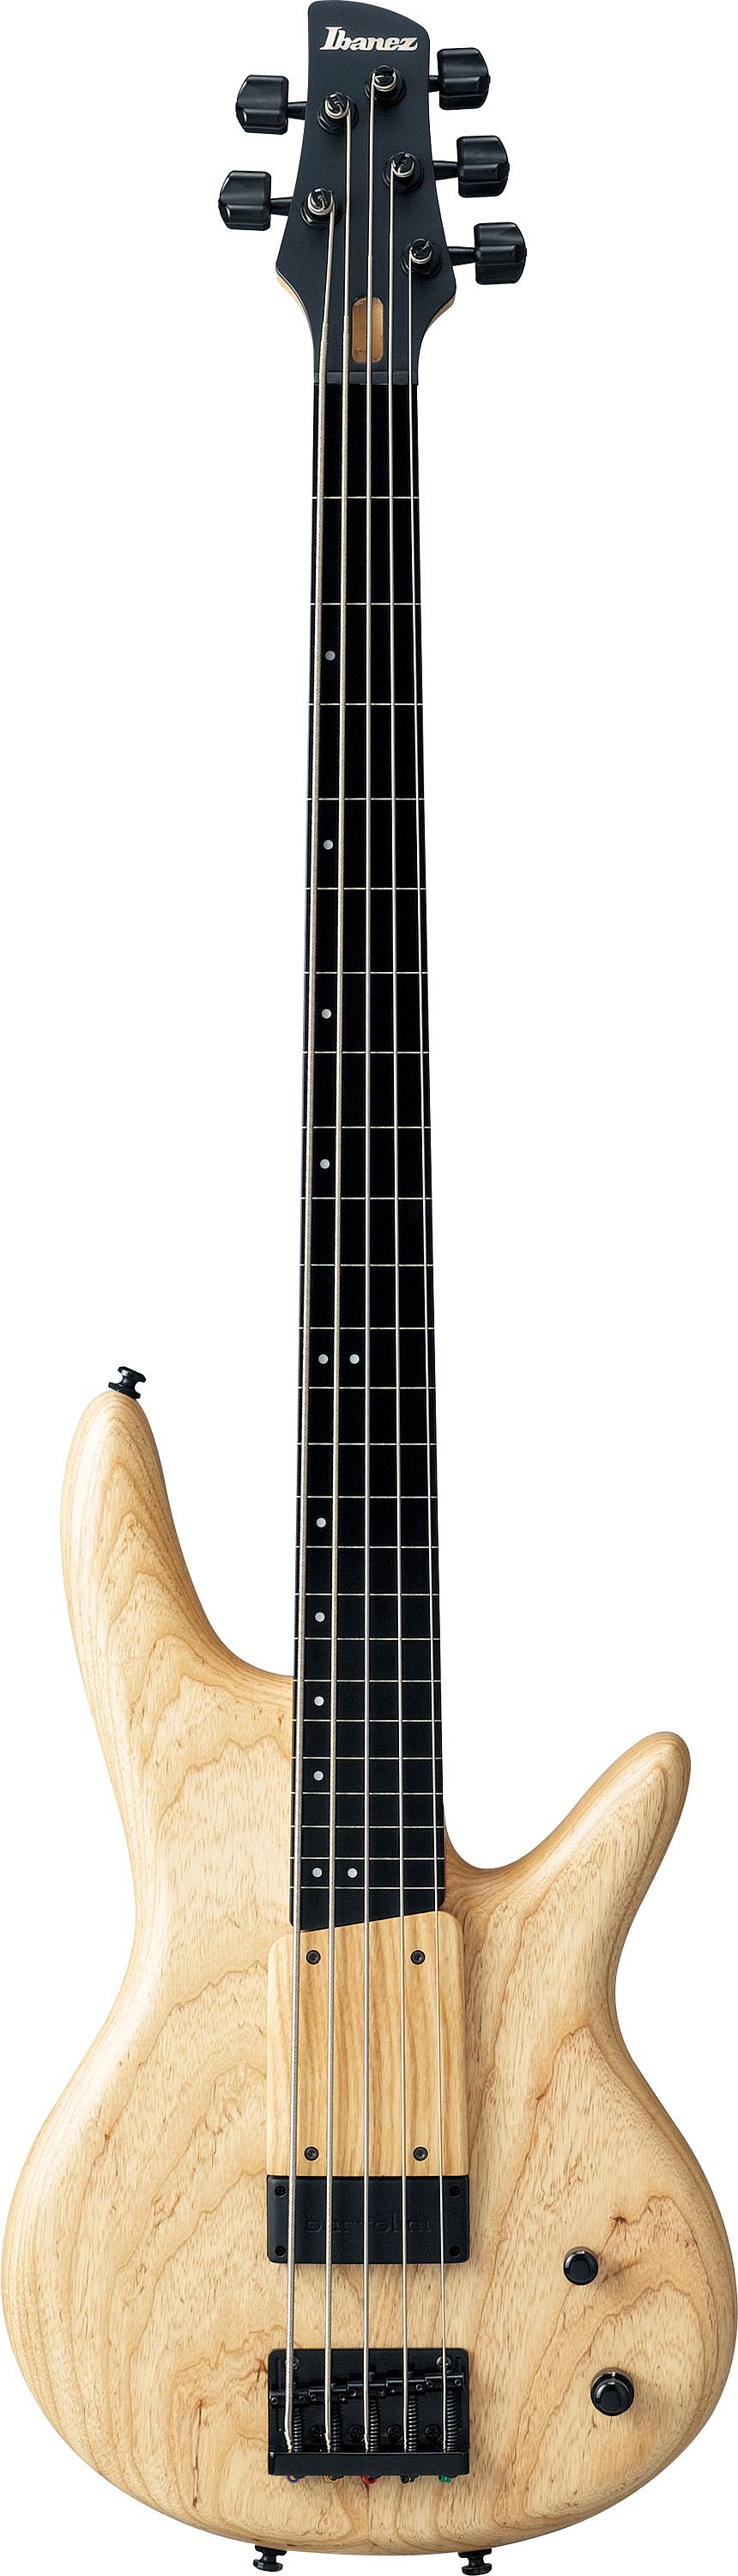 Ibanez GWB1005 NTF 5-струнная бас-гитара